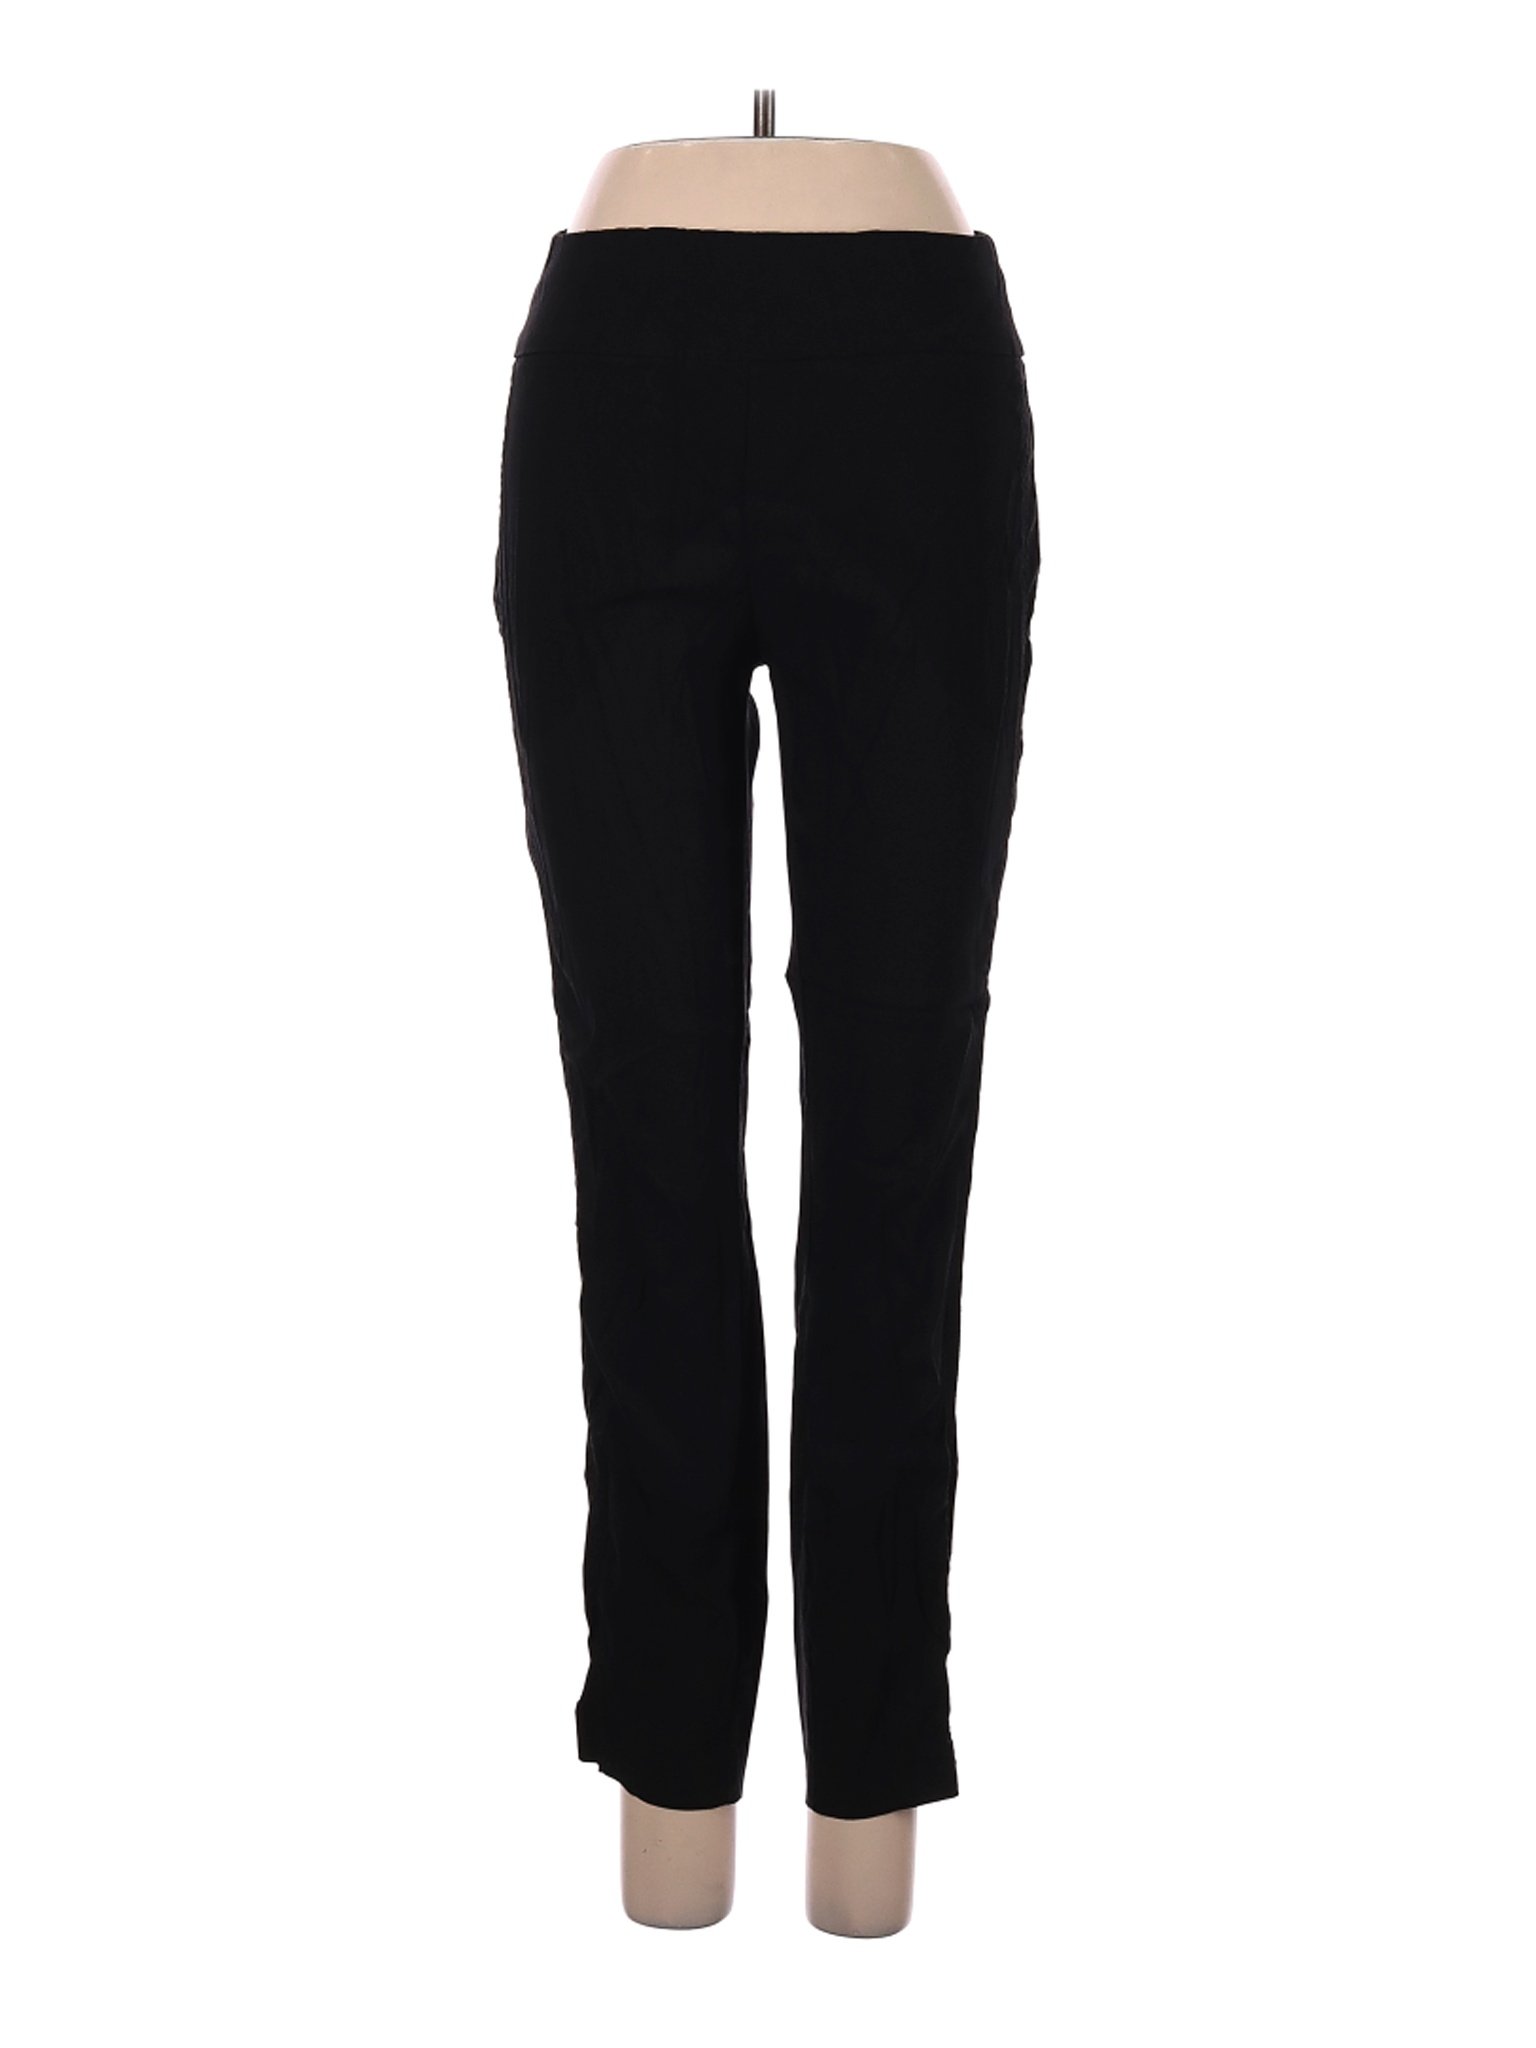 New York & Company Women Black Dress Pants S | eBay